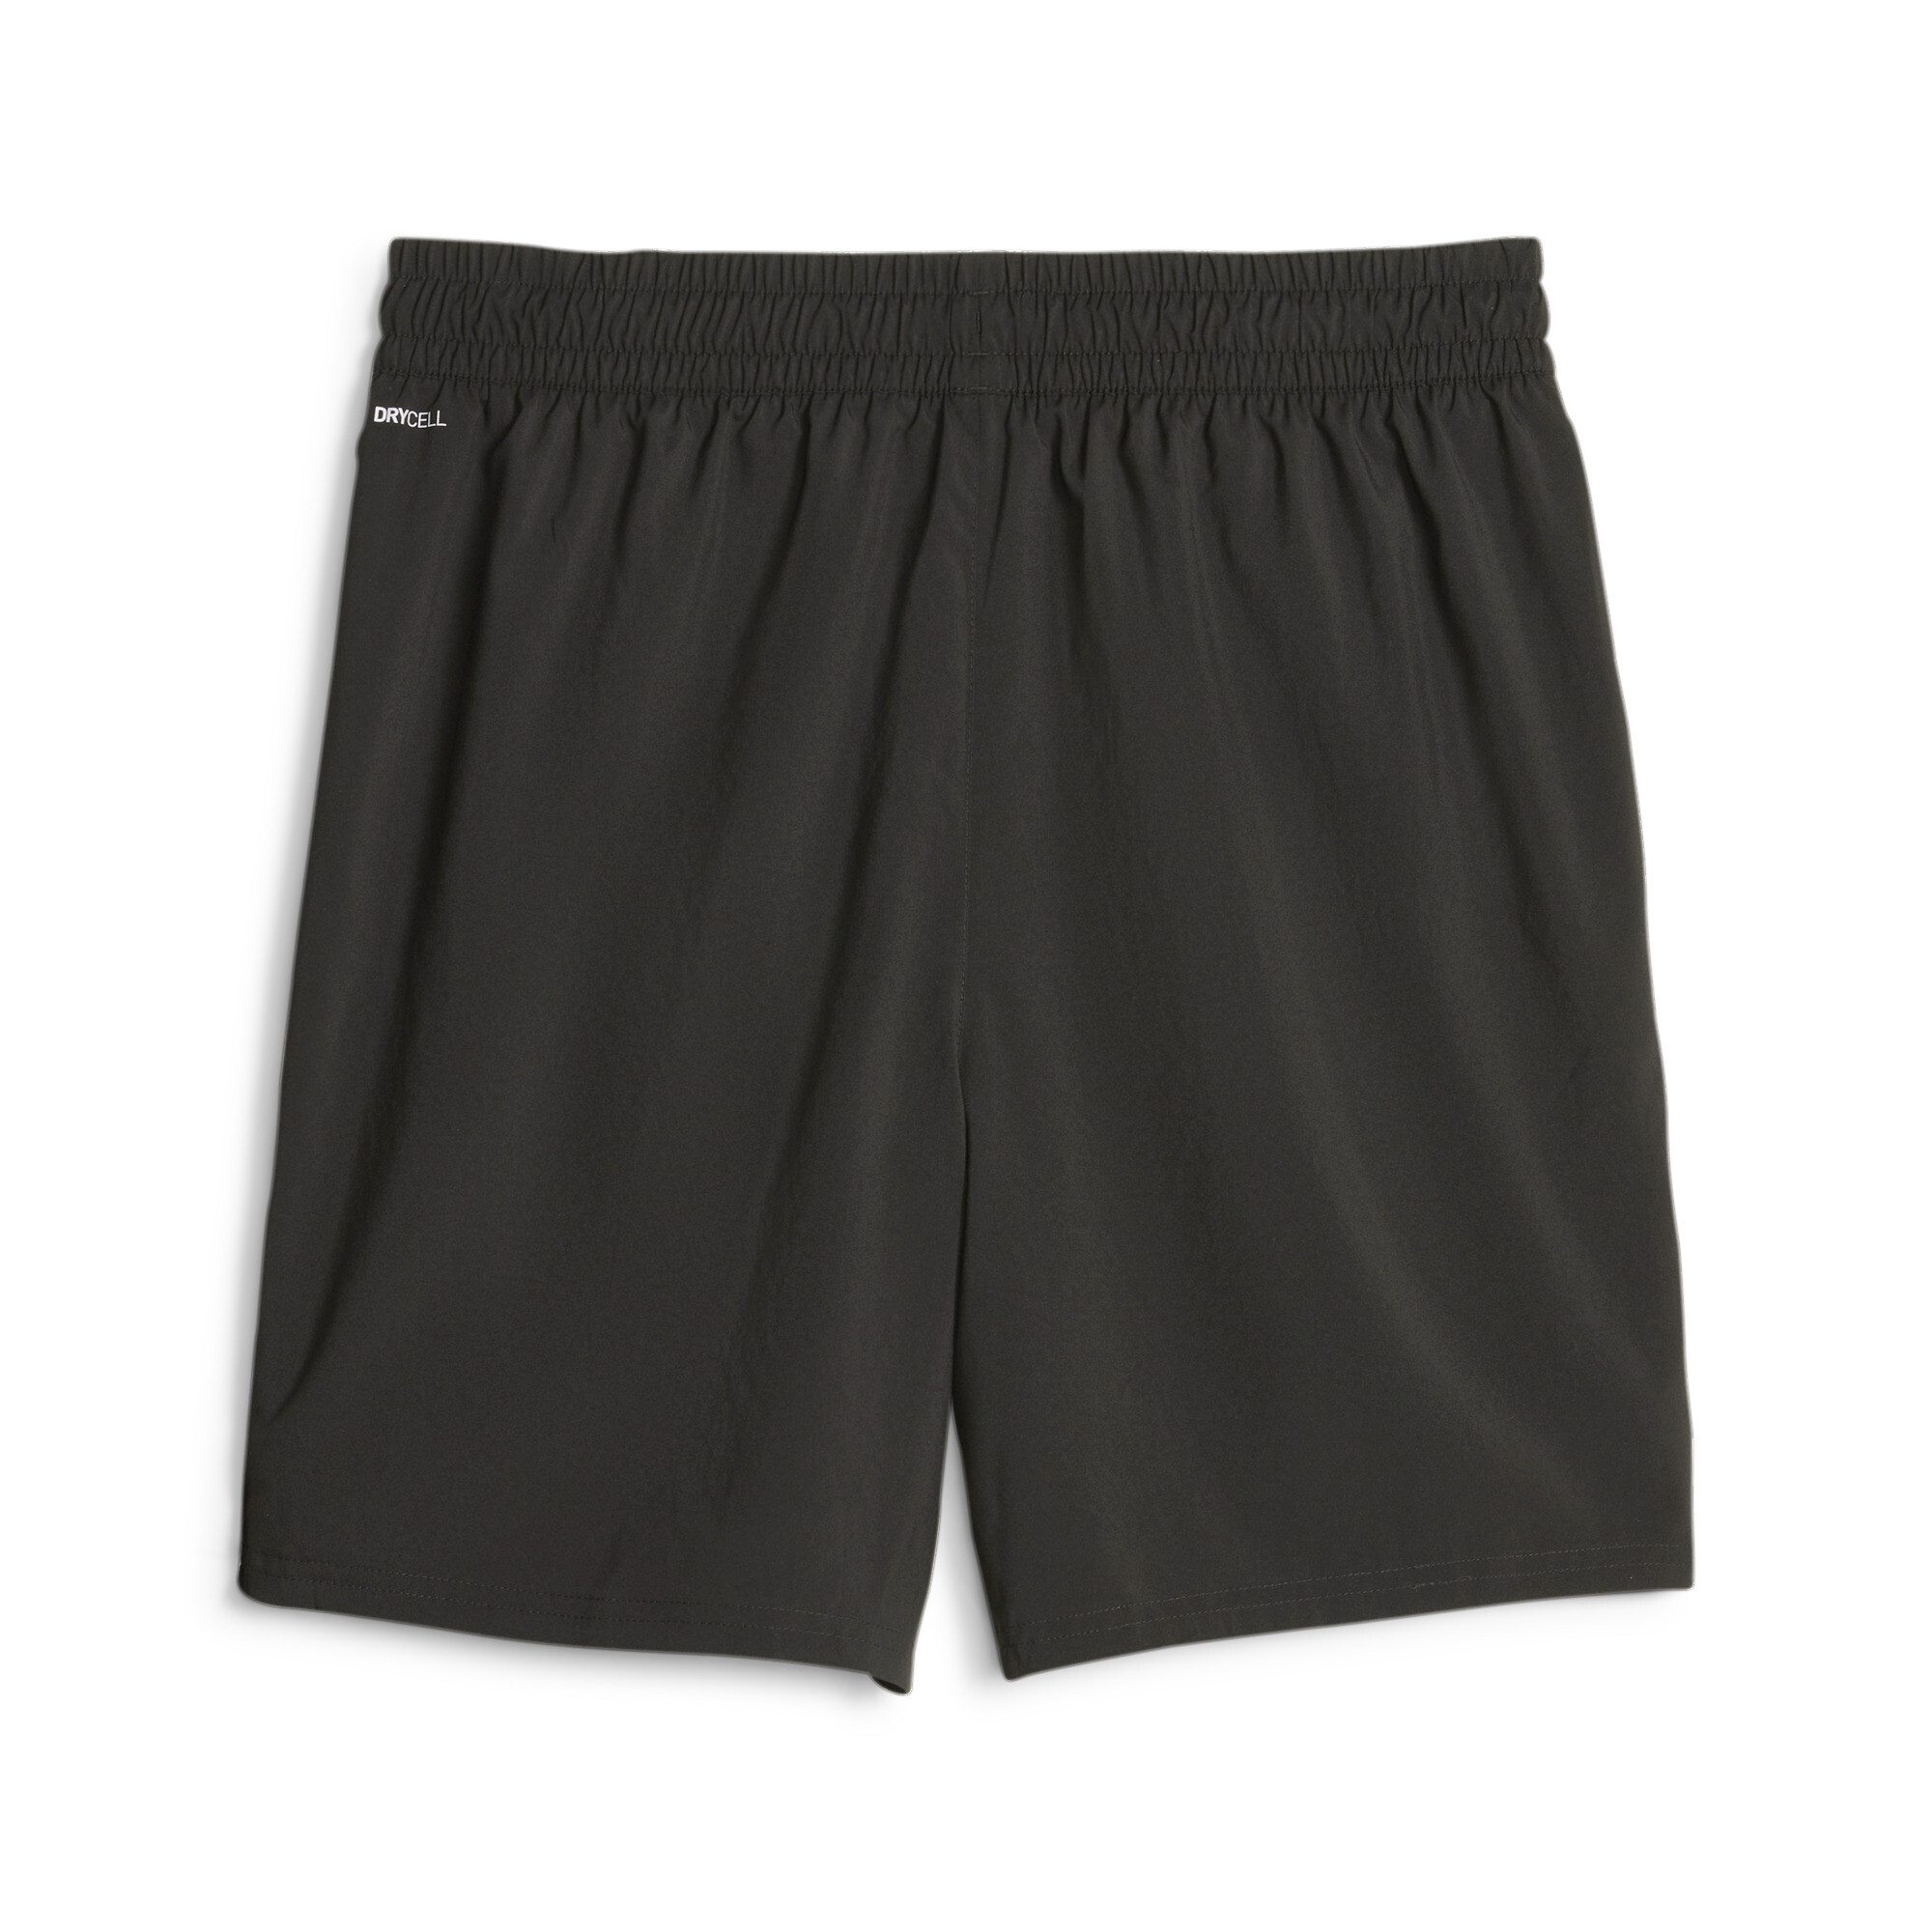 Men's PUMA Fit 7 Training Shorts In Black, Size XS